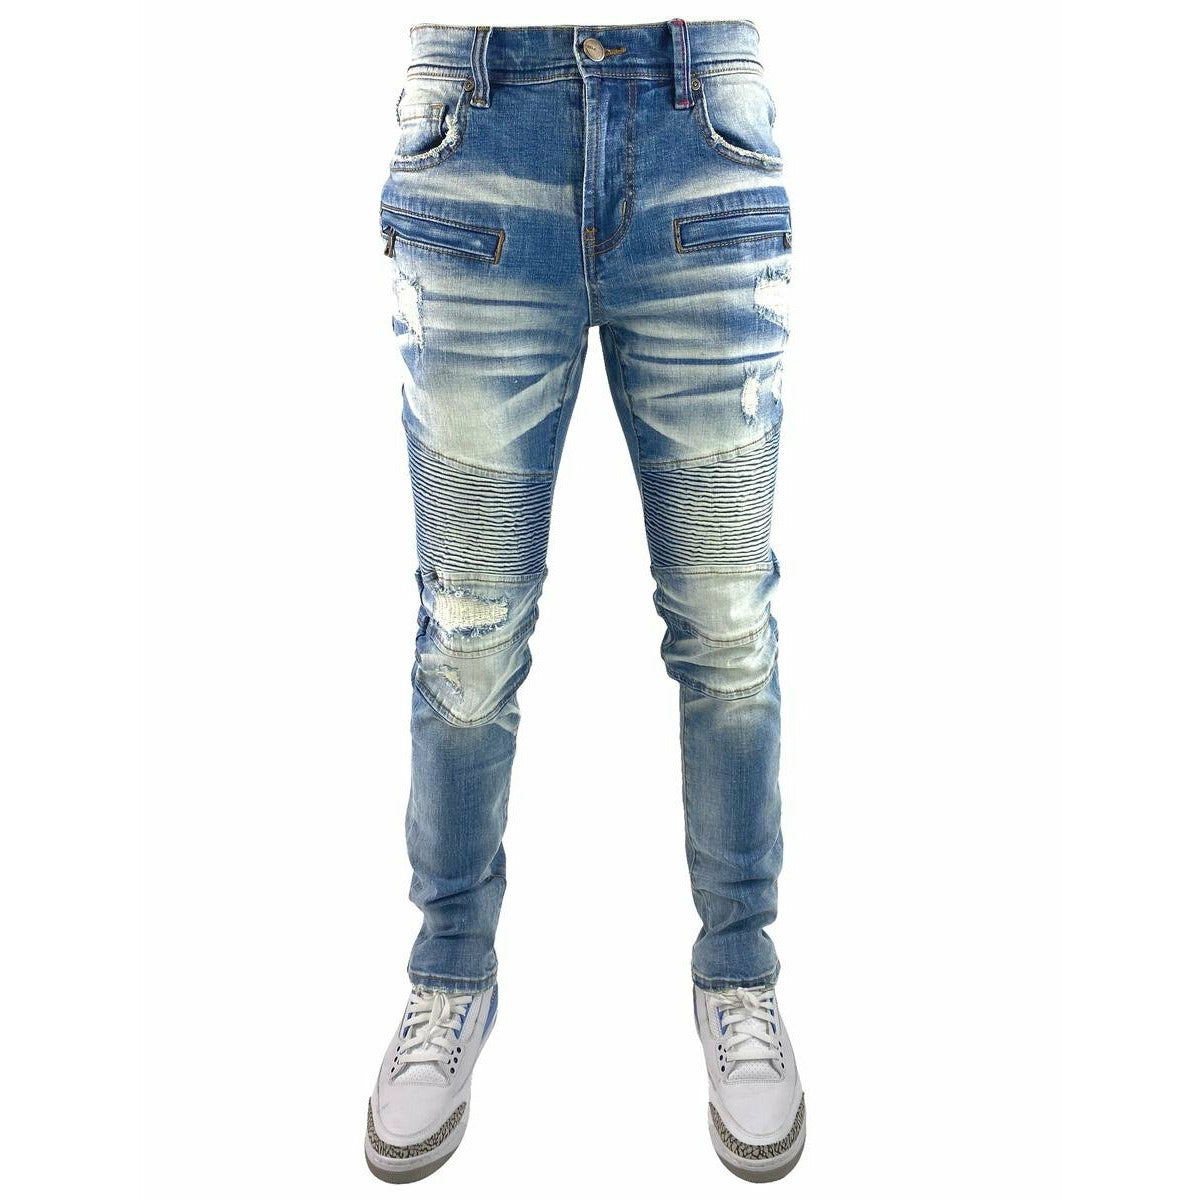 Preme Indigo Blue Biker Denim Jeans (PR-WB-721)